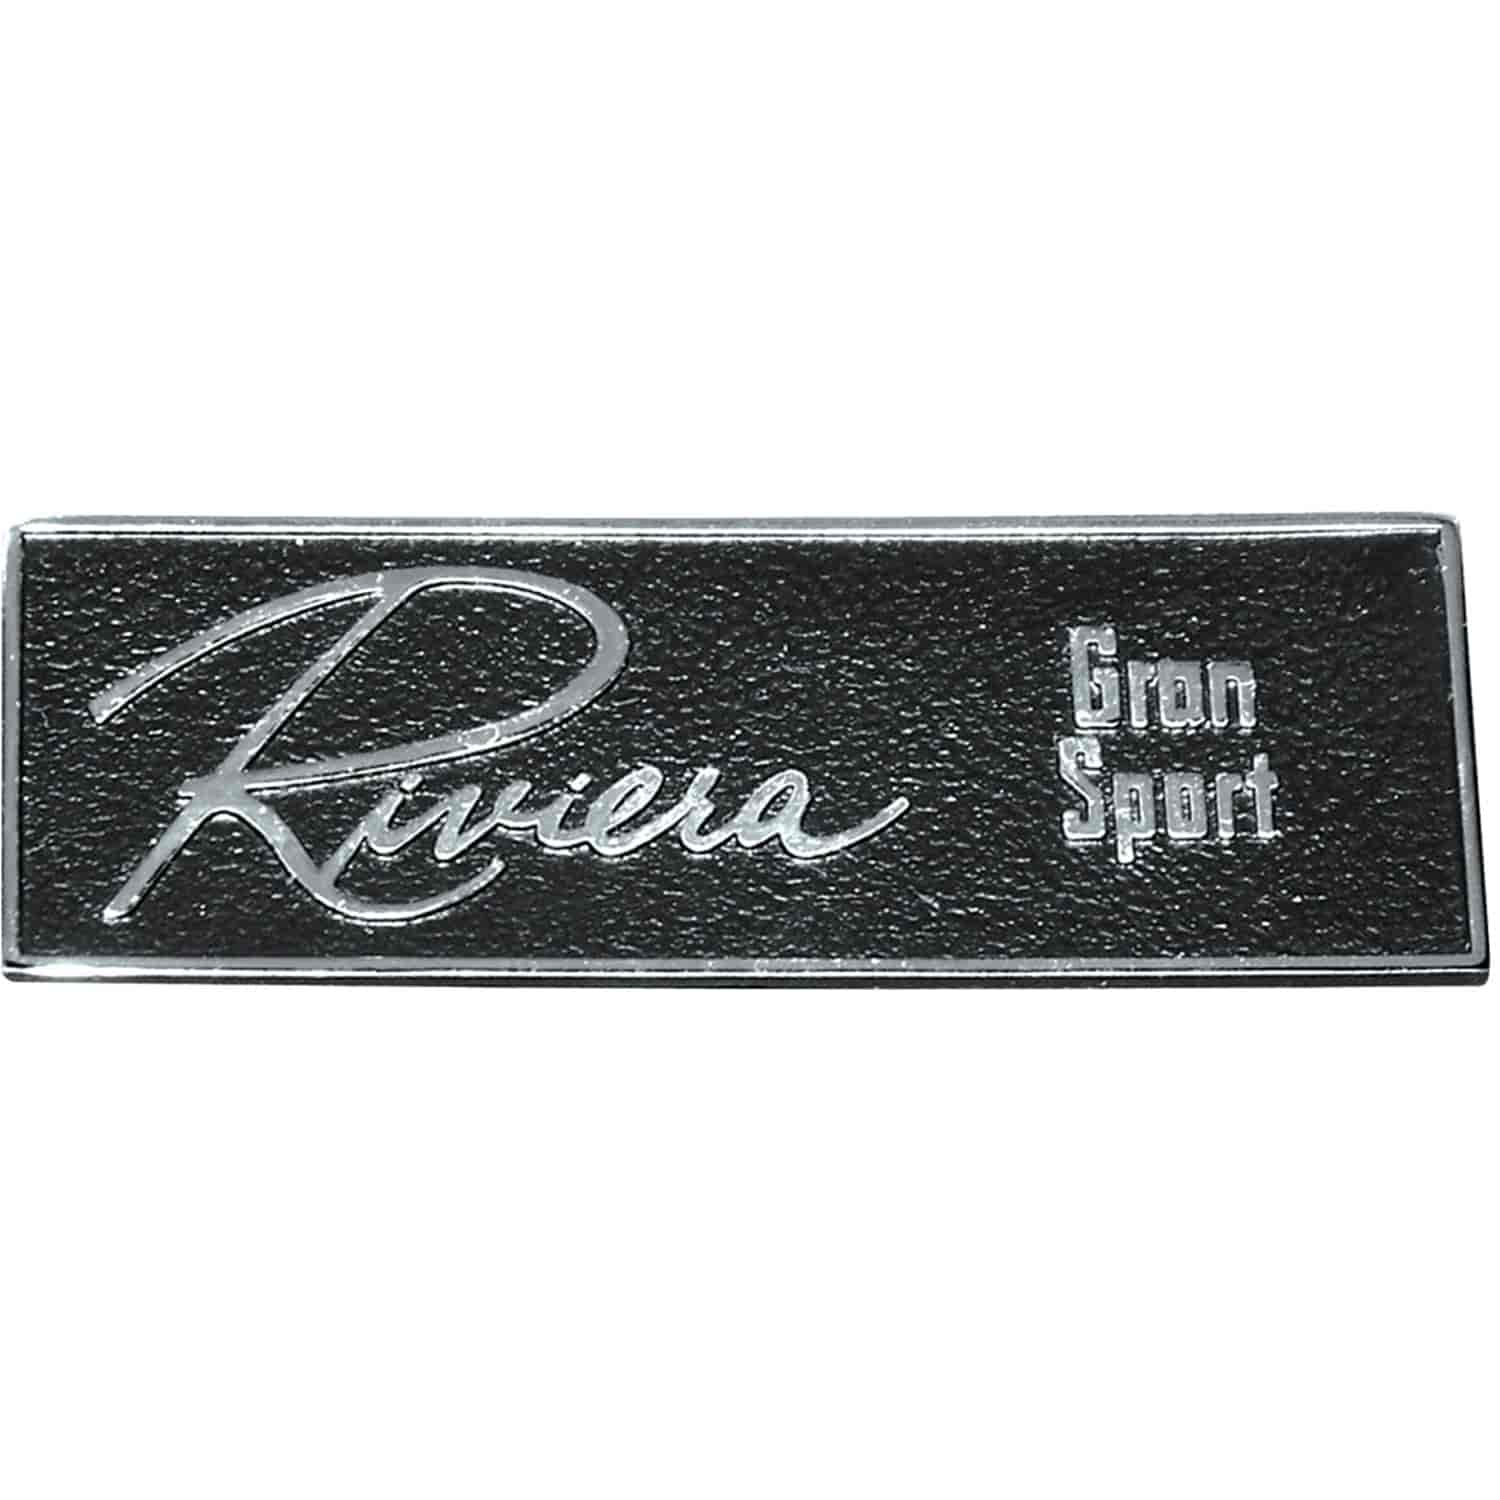 Emblem 65 Riviera Gran Sport Dash Panel